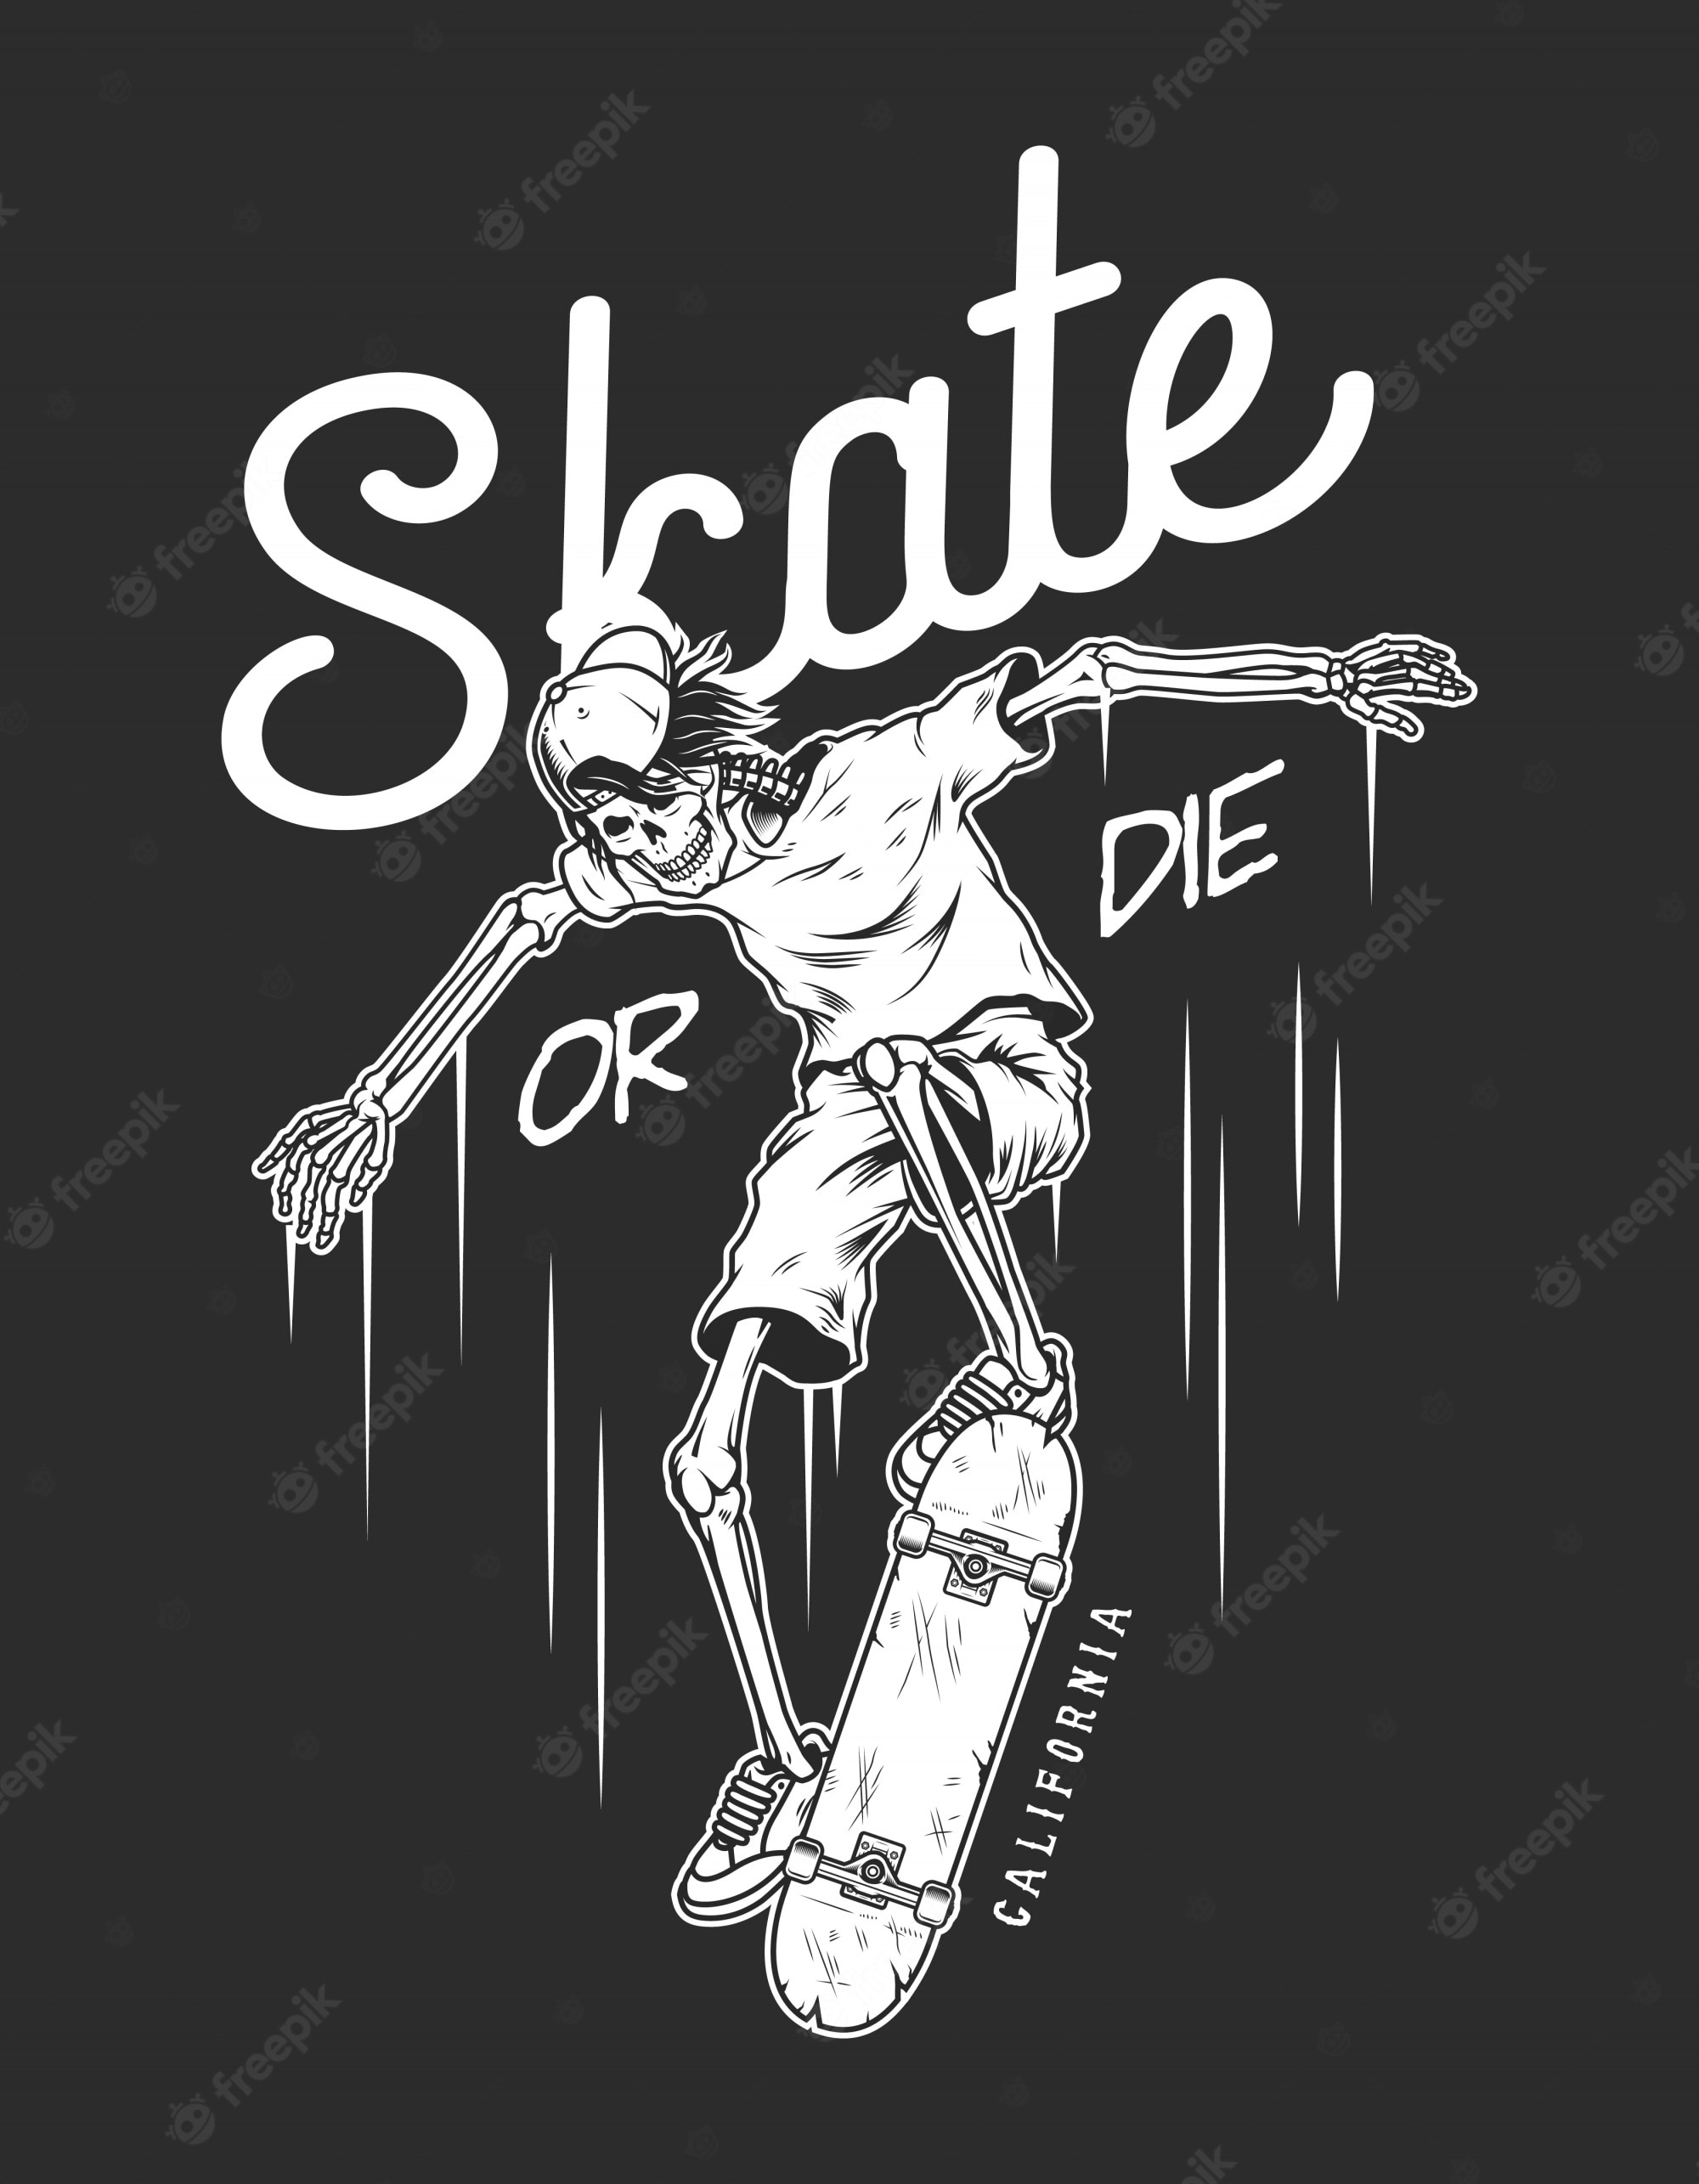 Old School Skateboard Logos Wallpapers